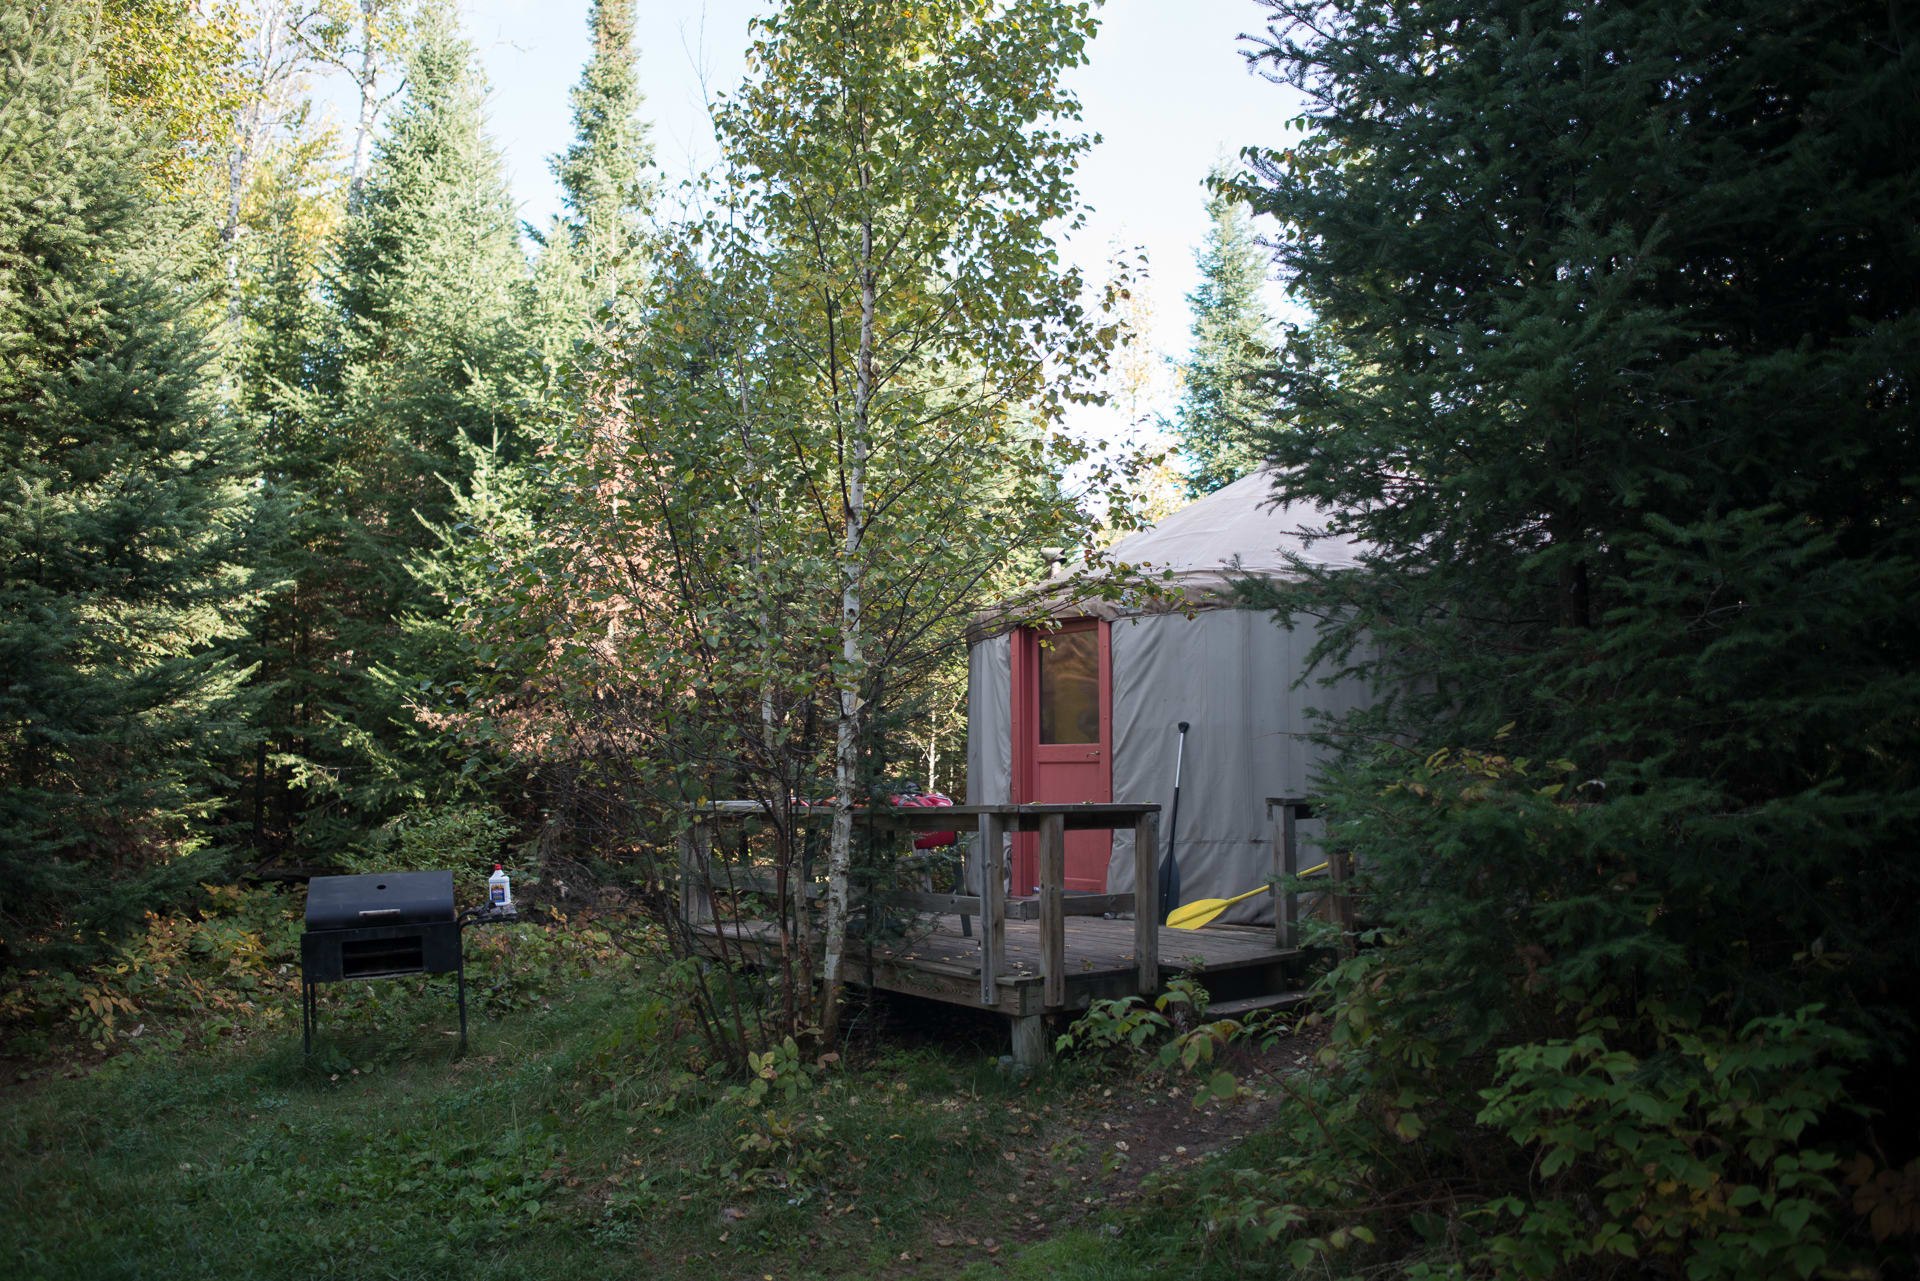 The yurt life.